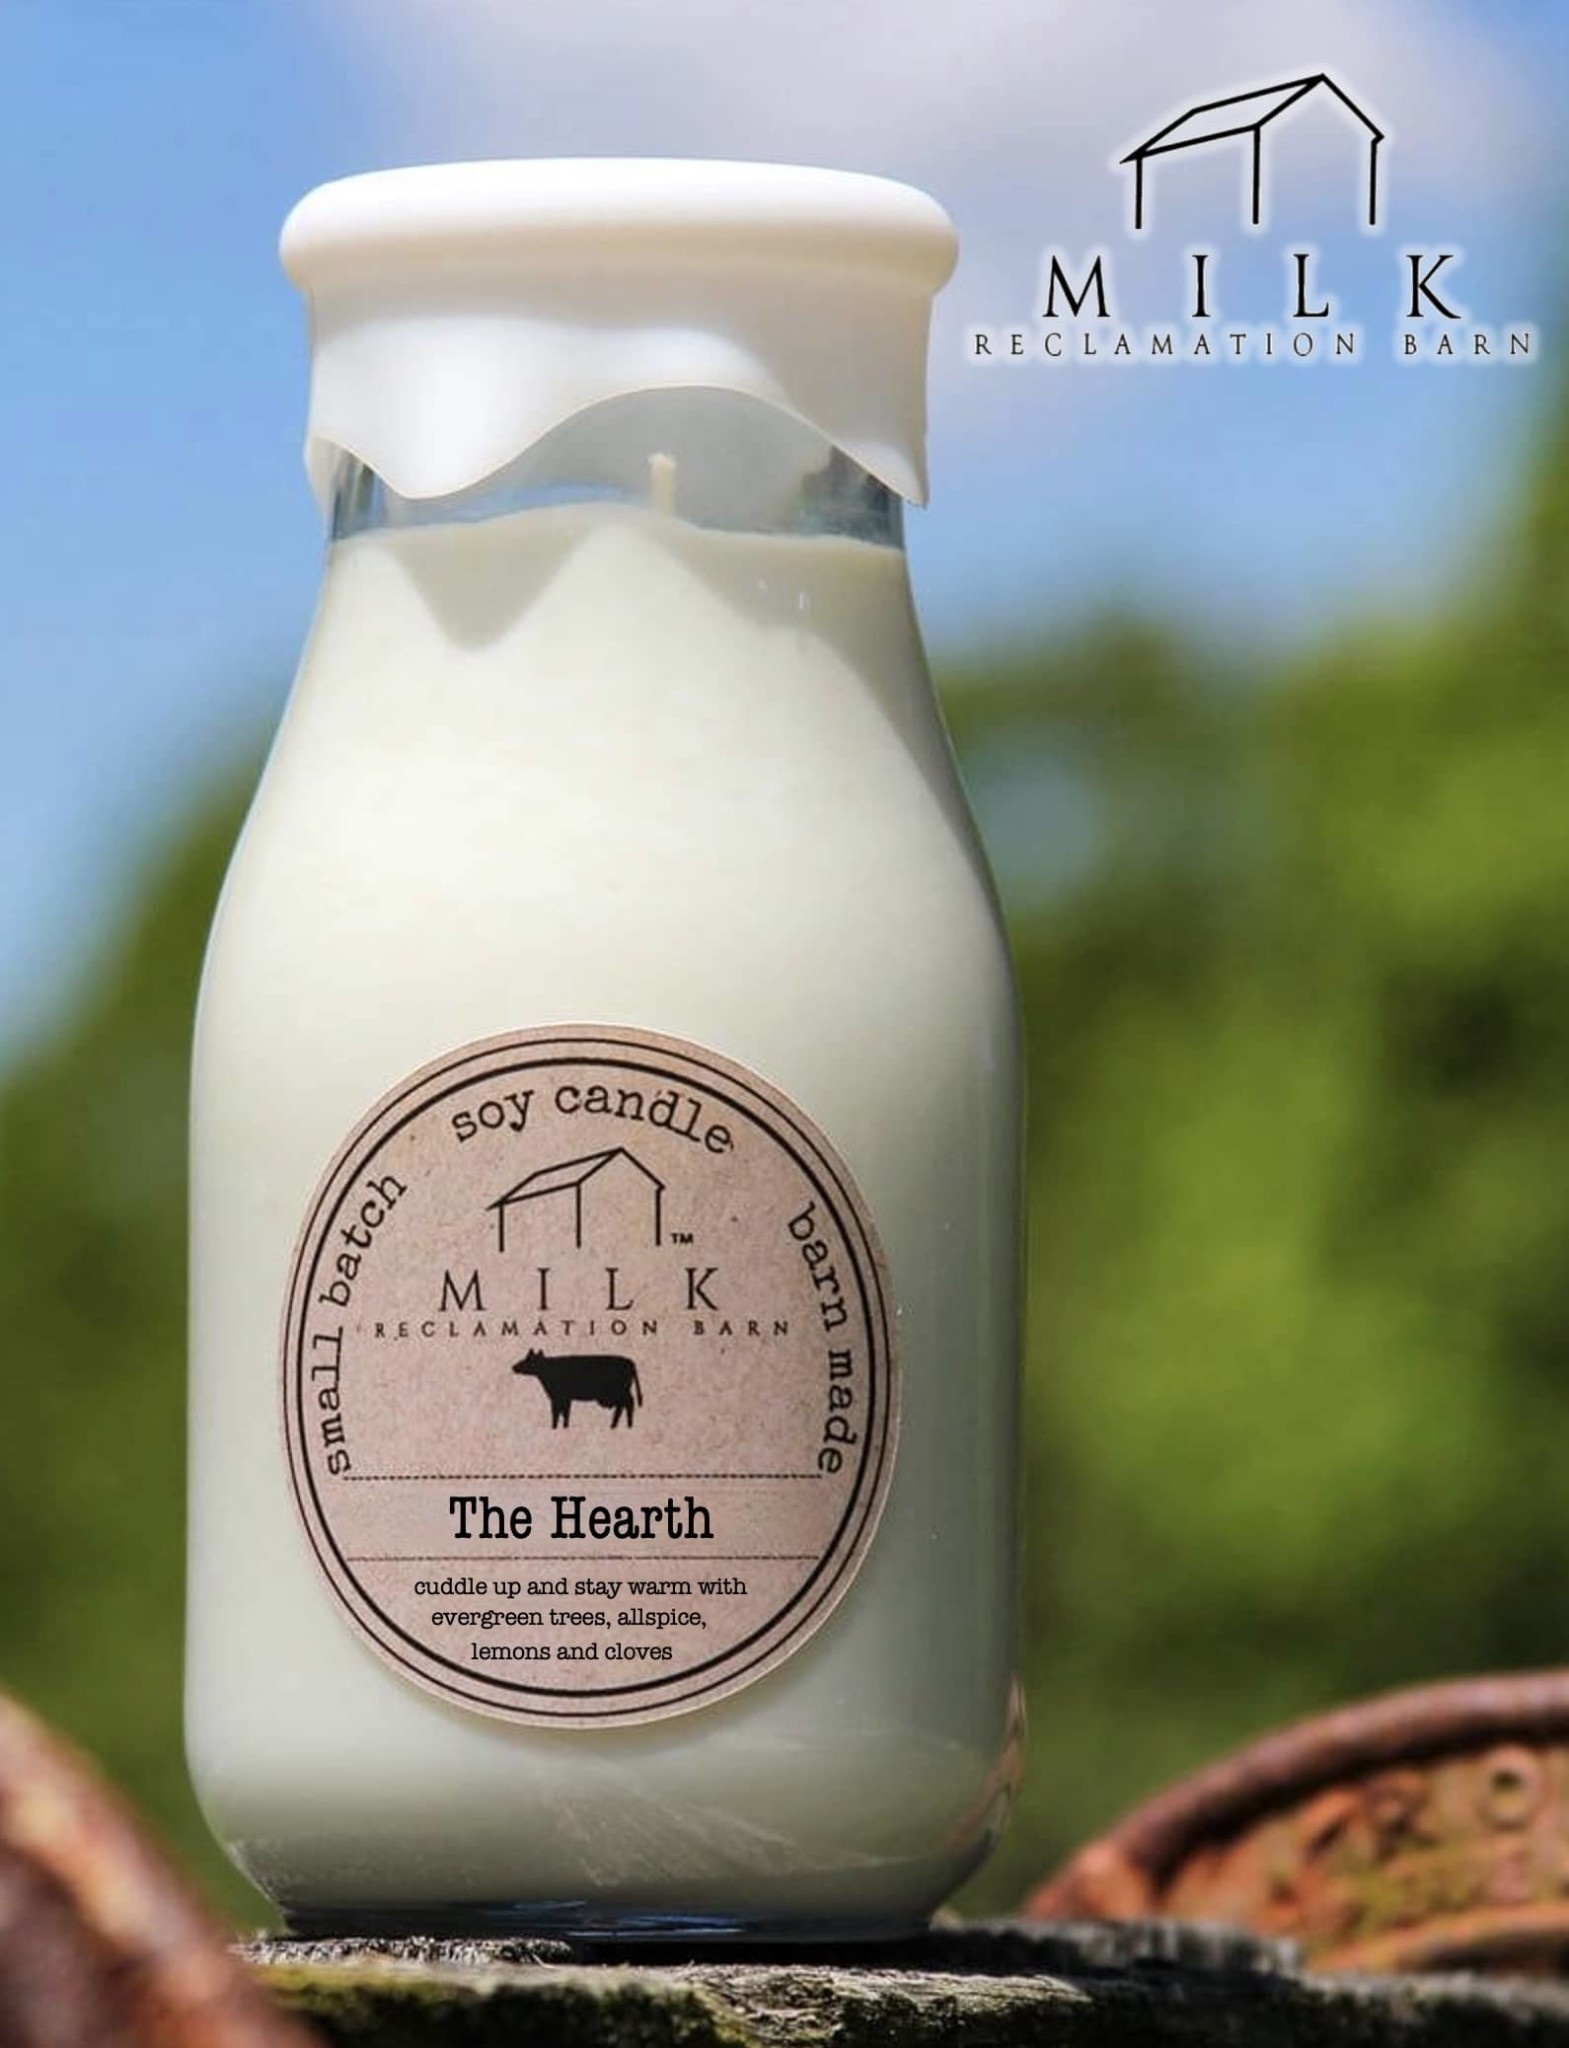 Milk Reclamation Barn Candles The Hearth Milk Bottle Candle - 16oz Brand: Milk Reclamation Barn Candles